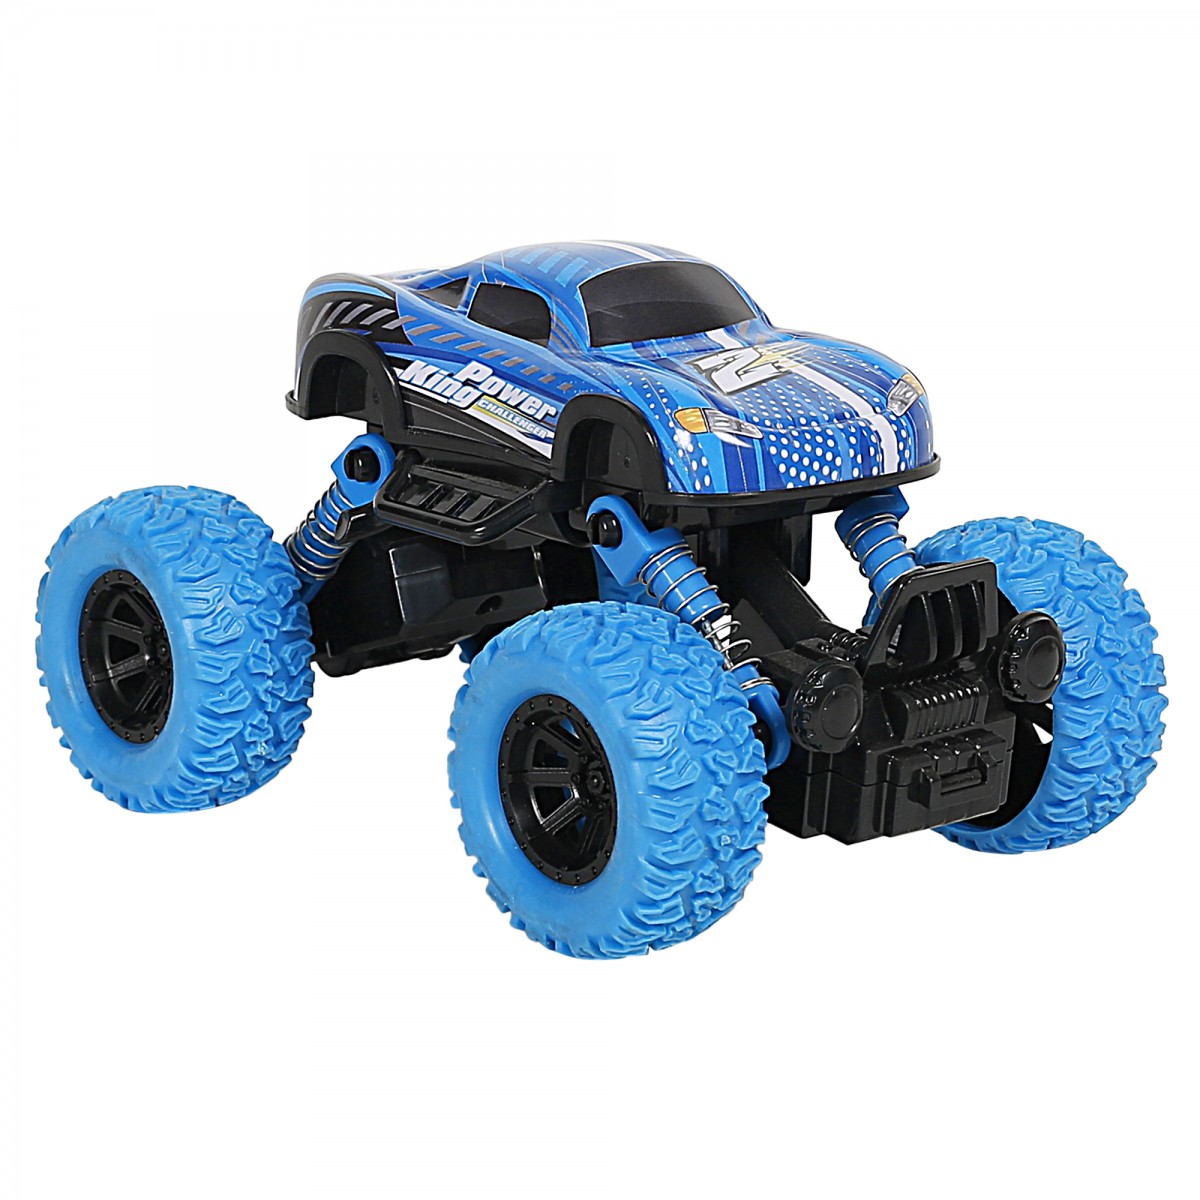 Ralleys Pull Back Monster Car, Blue, 3Y+